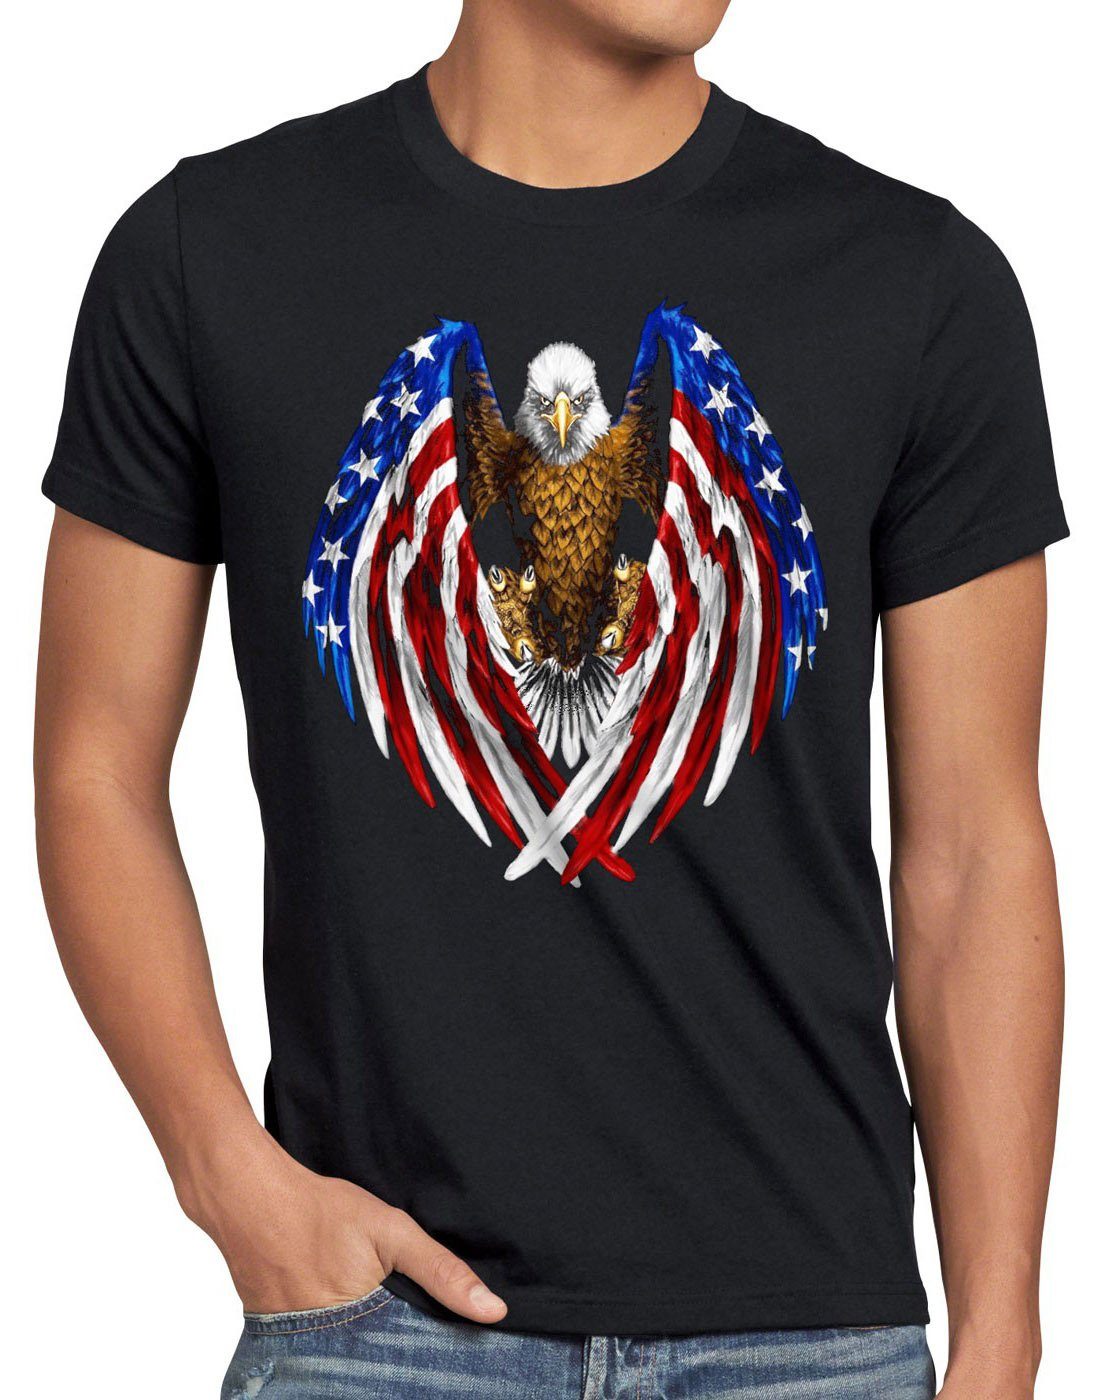 of states stars flagge schwarz america style3 stripes adler usa 4. and unites US juli Print-Shirt Herren T-Shirt